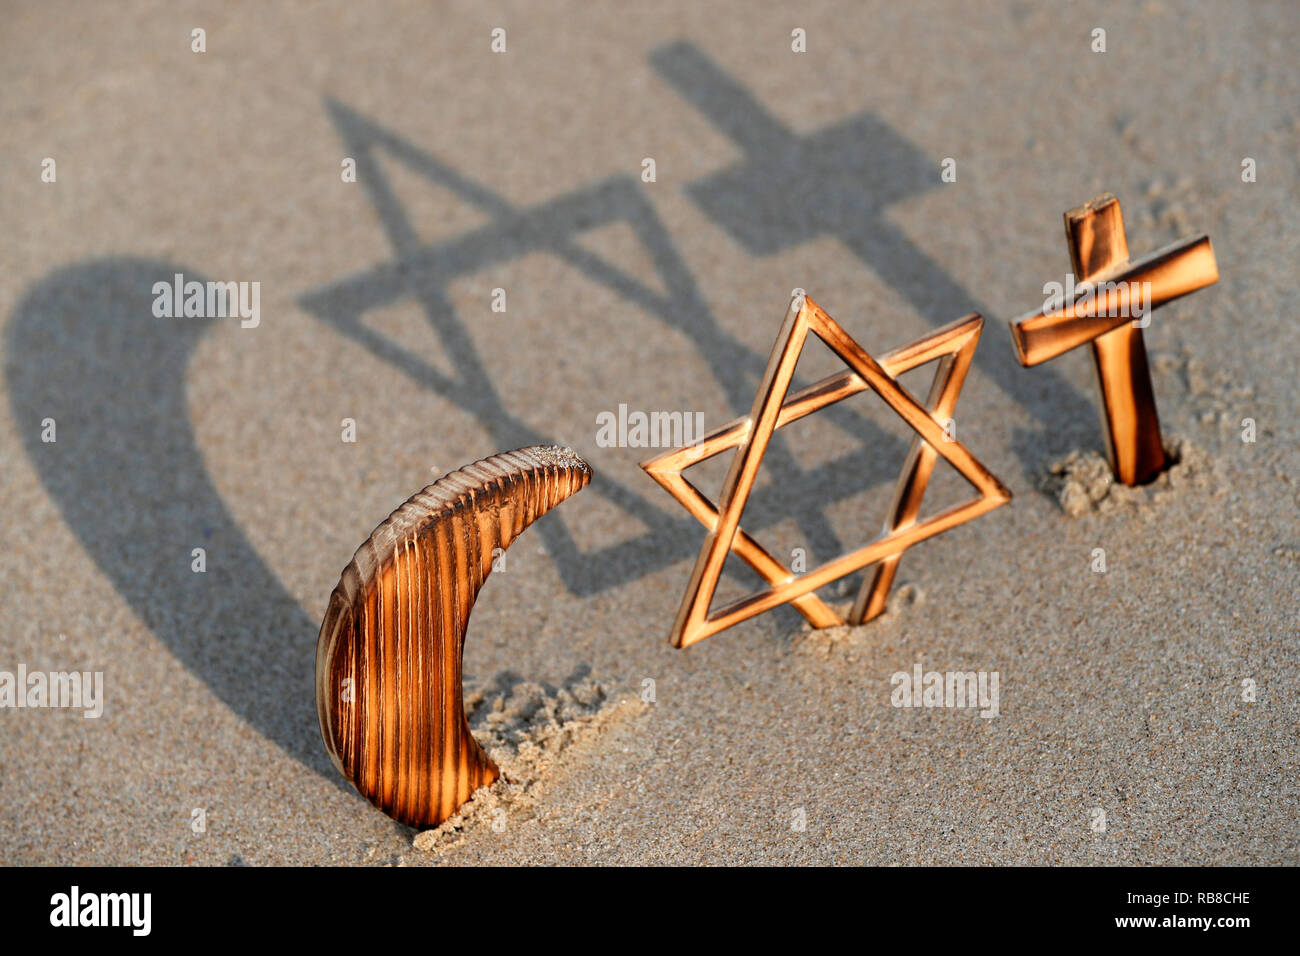 Symboles interreligieux. Christianity, Islam, Judaism 3 monotheistic religions. Jewish Star, Cross and Crescent : Interreligious symbols. Stock Photo